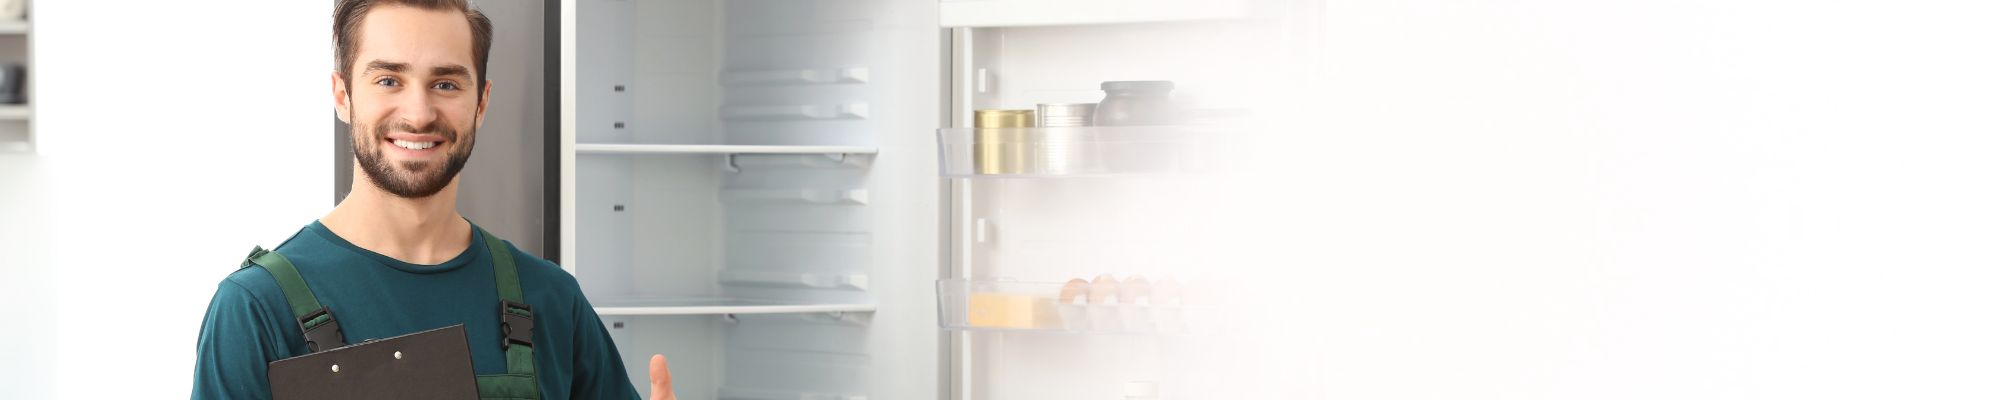 All-Refrigerators (No Freezer)